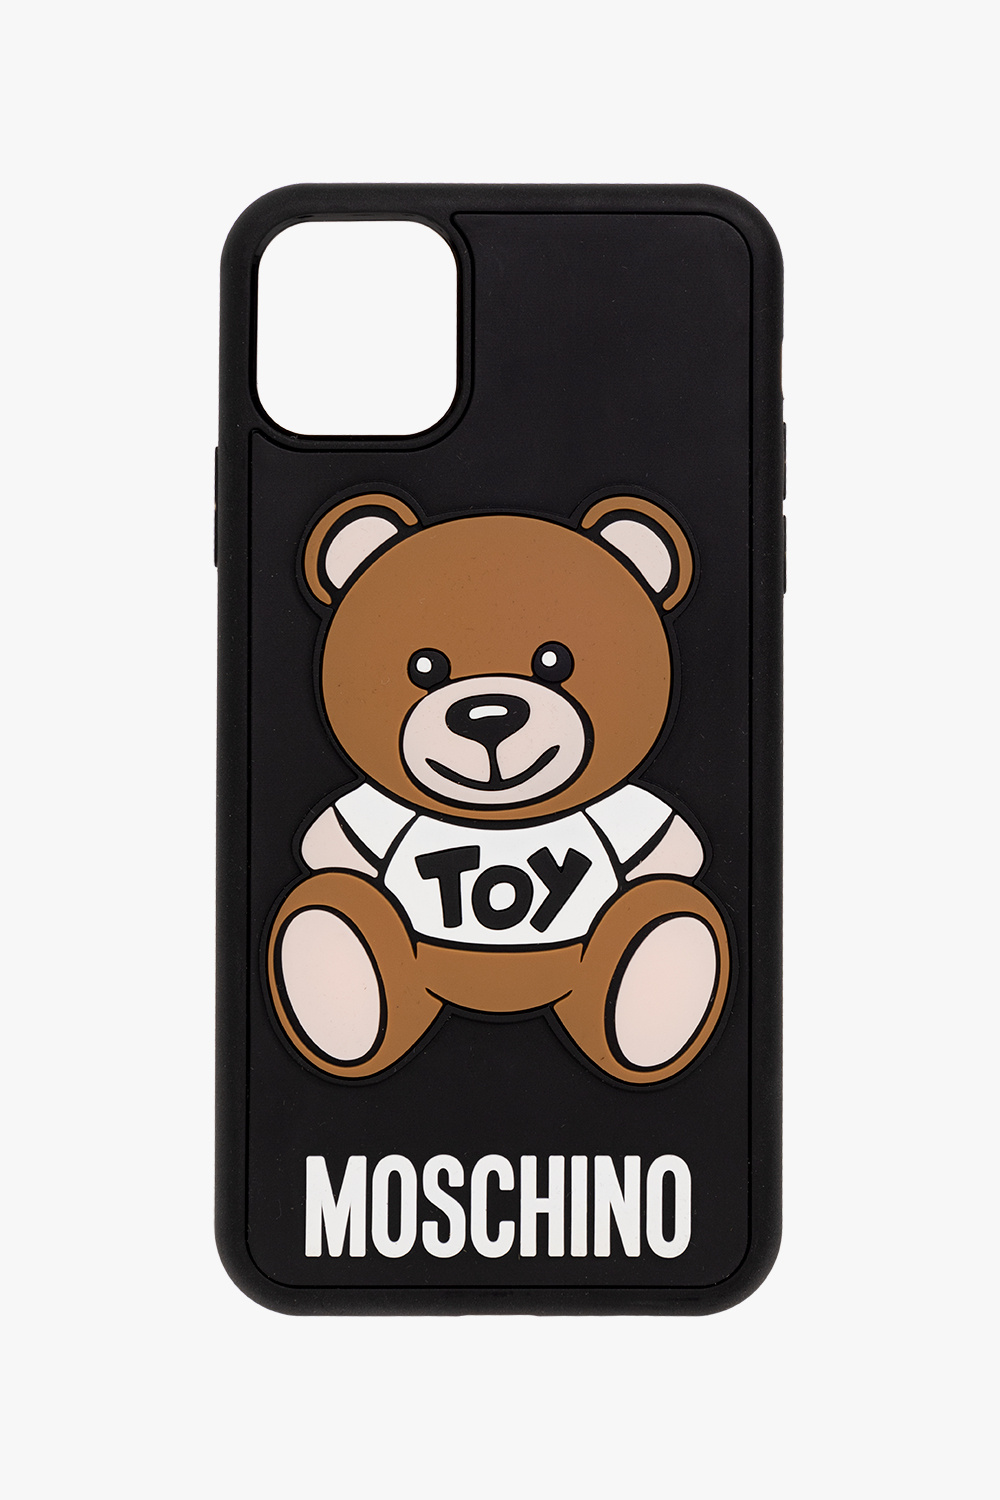 Moschino iPhone 11 Pro Max case